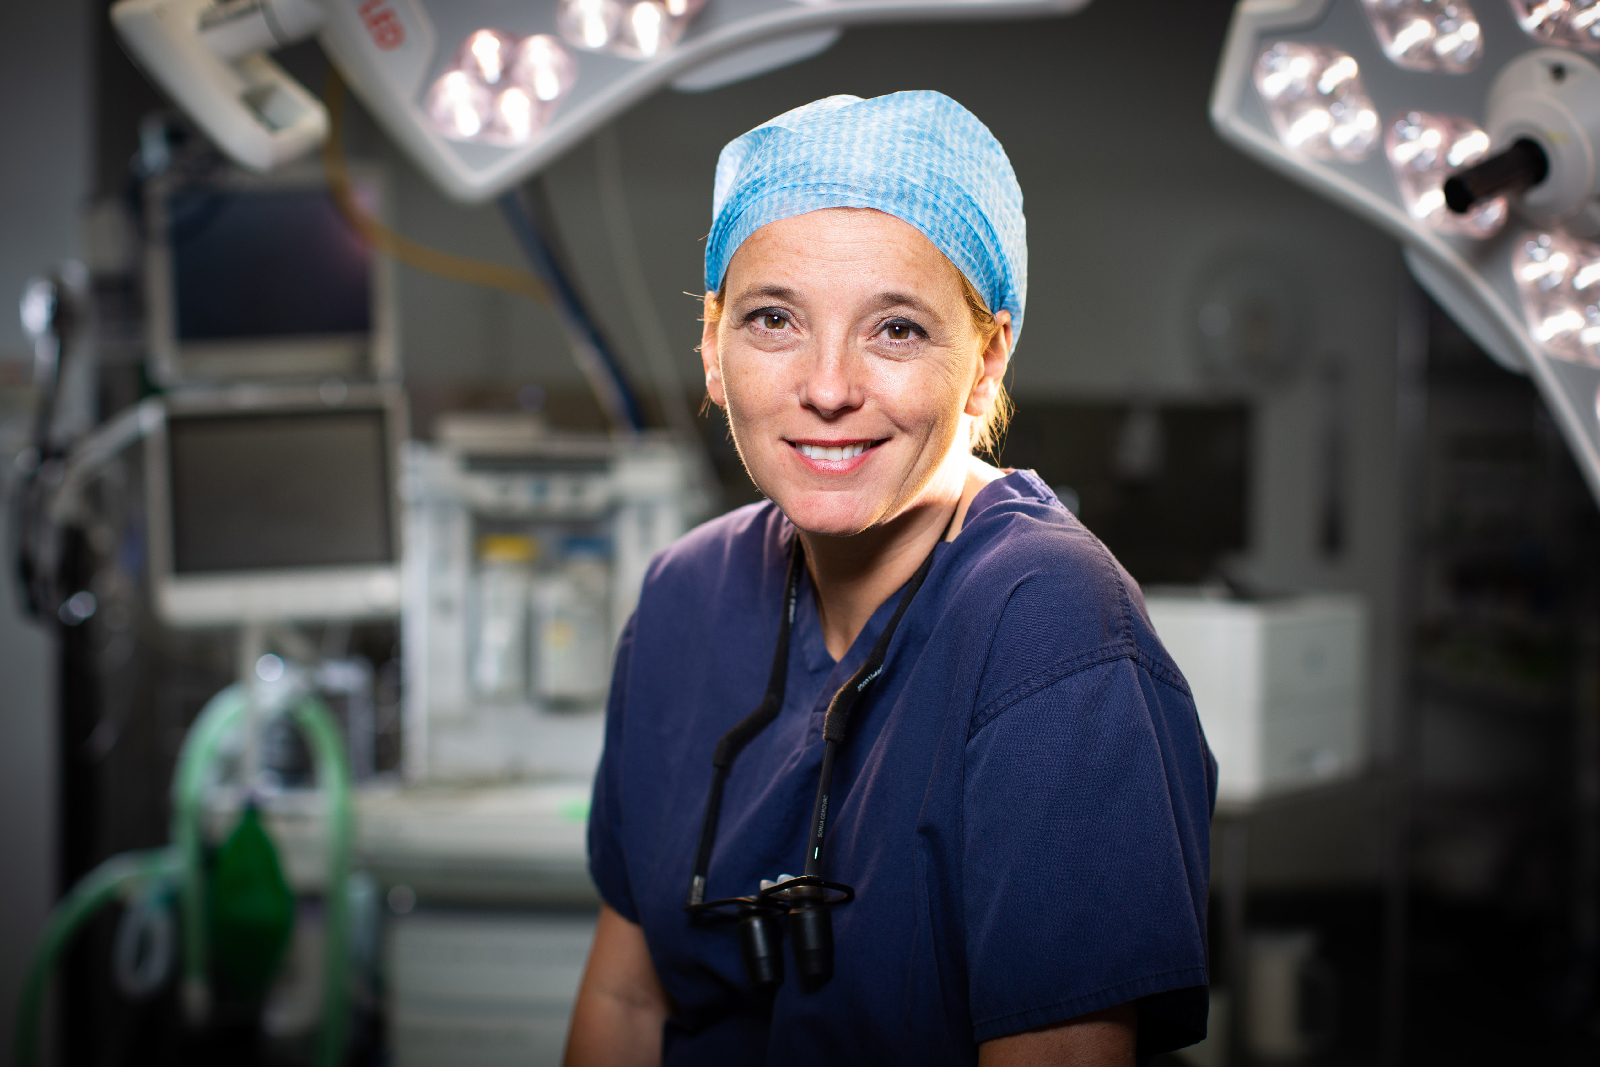 Sonja Cerovac platic surgeon